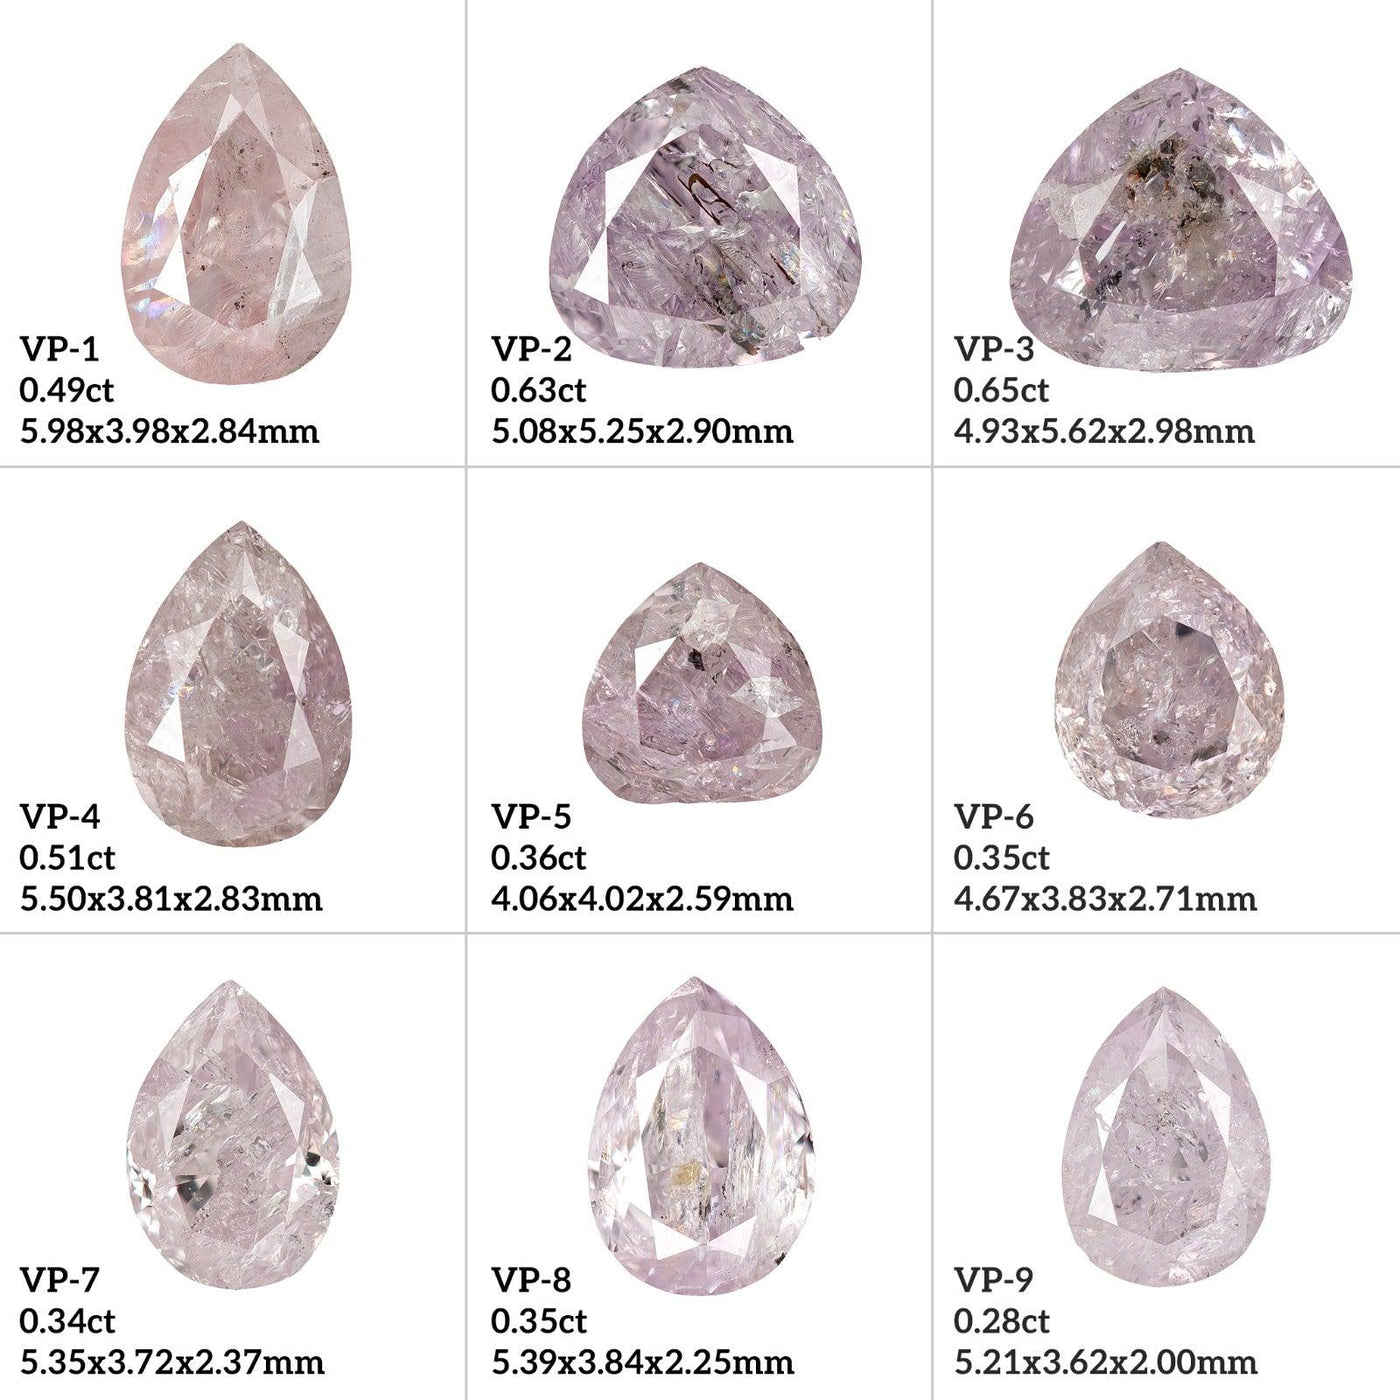 VP4 - Vivid pink pear diamond - Rubysta